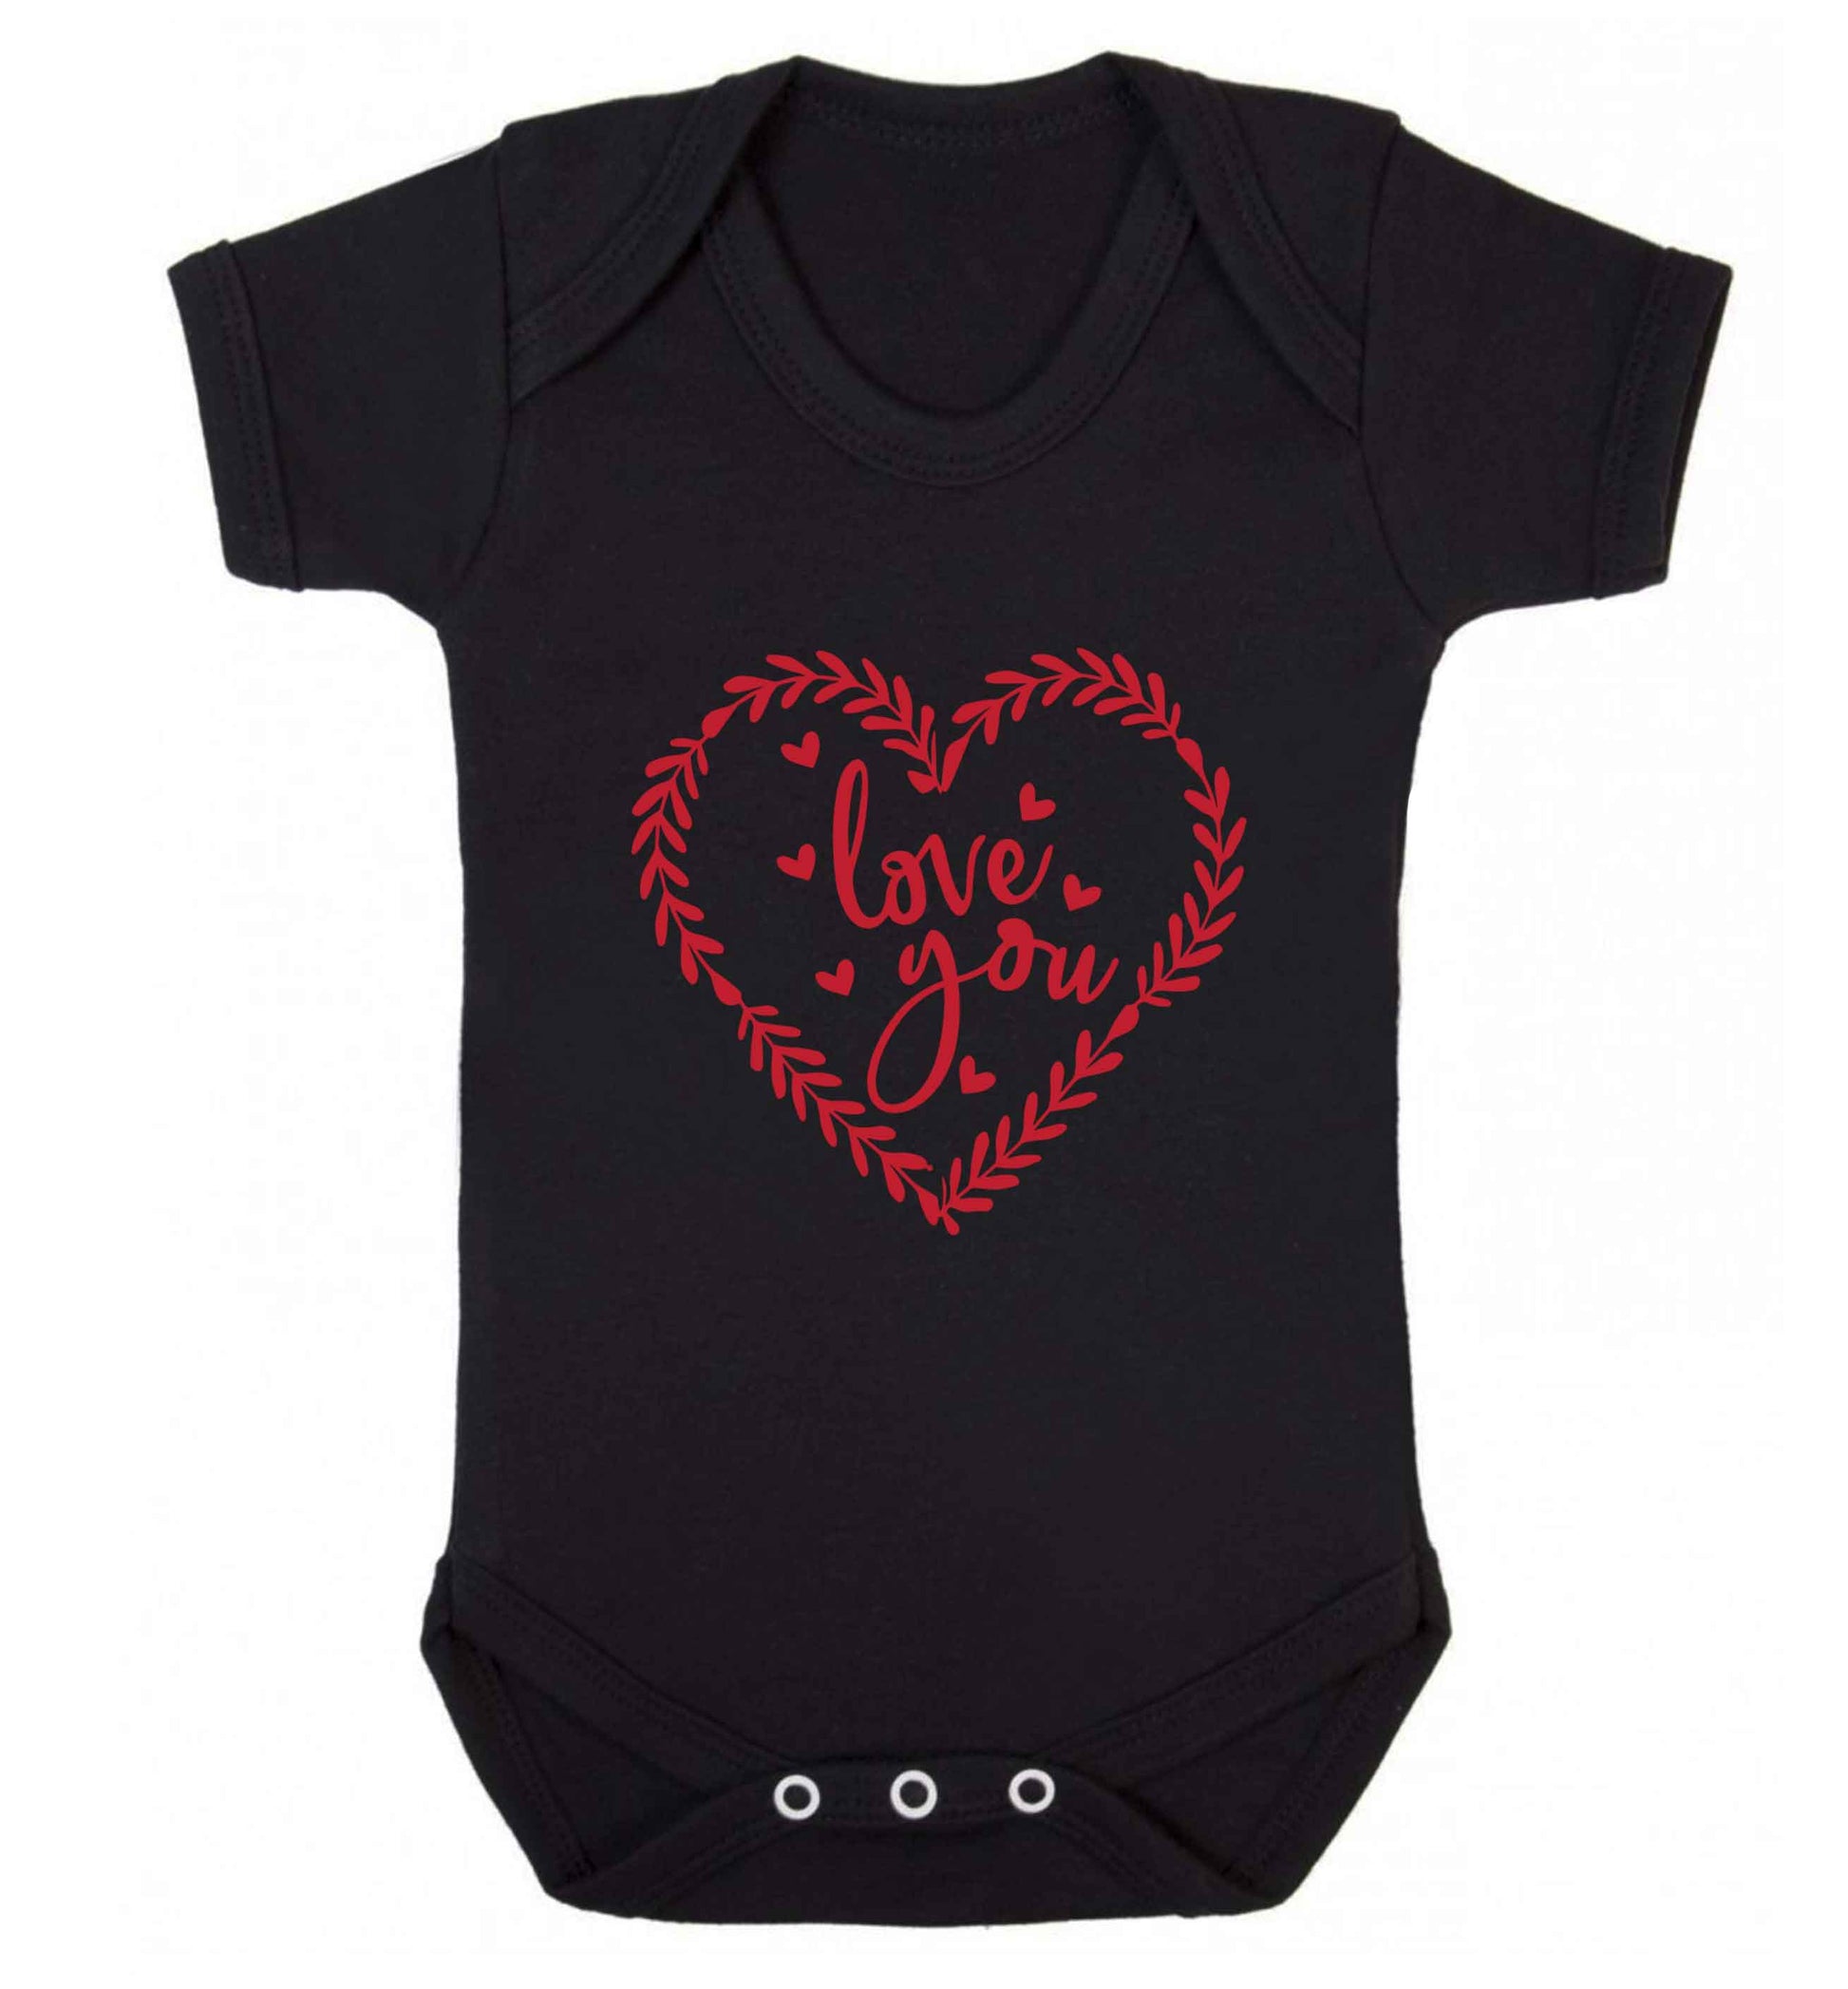 Love you baby vest black 18-24 months